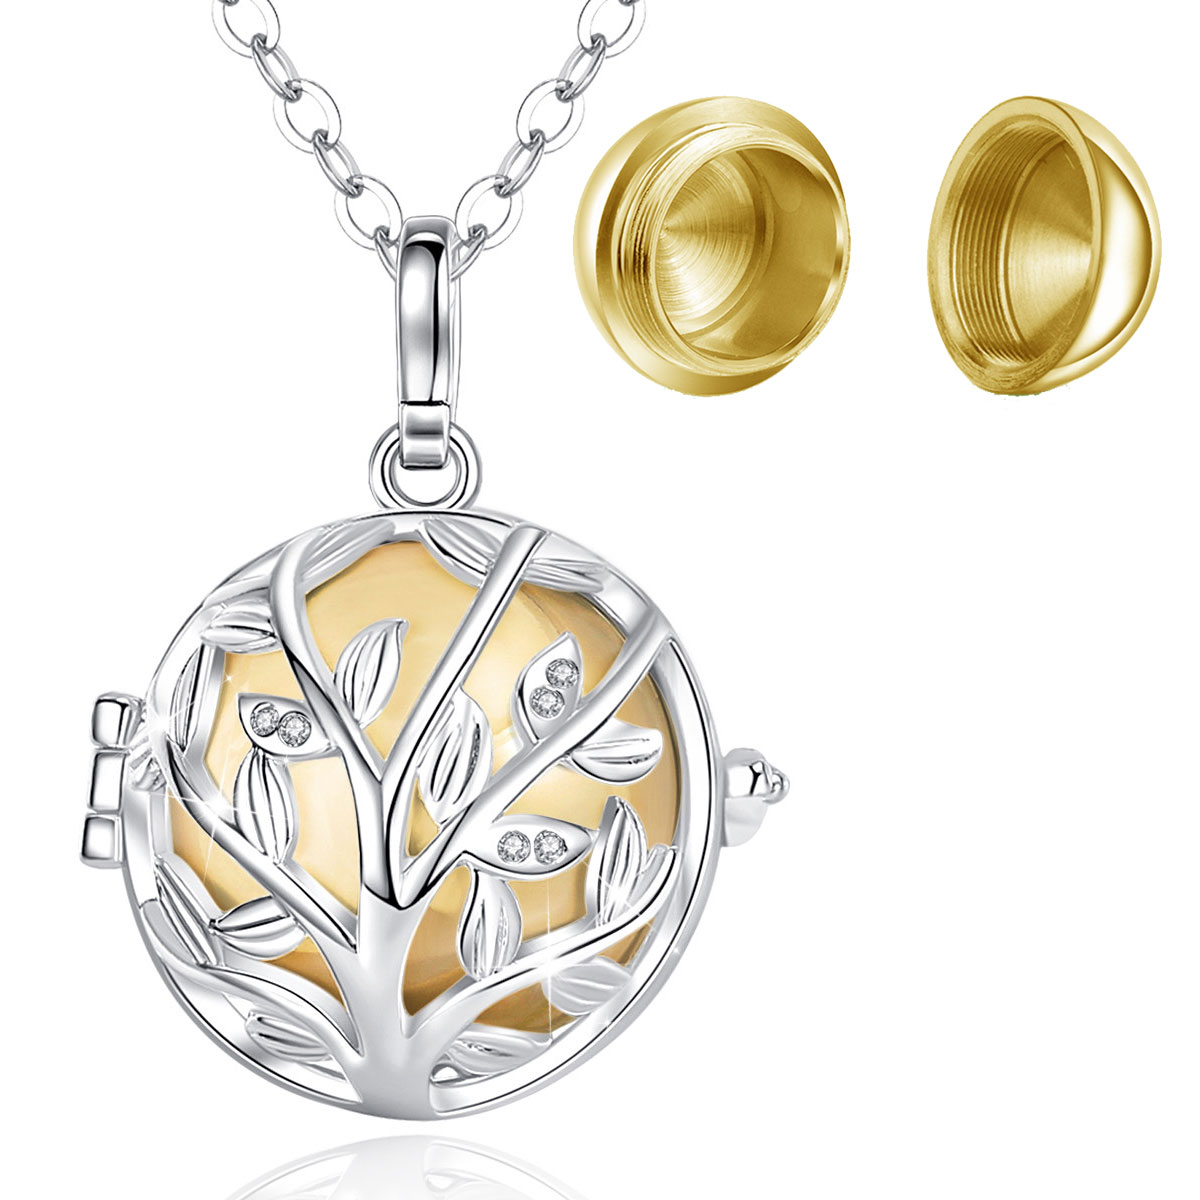 Merryshine Jewelry Tree of Life Design Cremation Memorial Ashes Urn Necklace Jewelry Keepsake Pendant